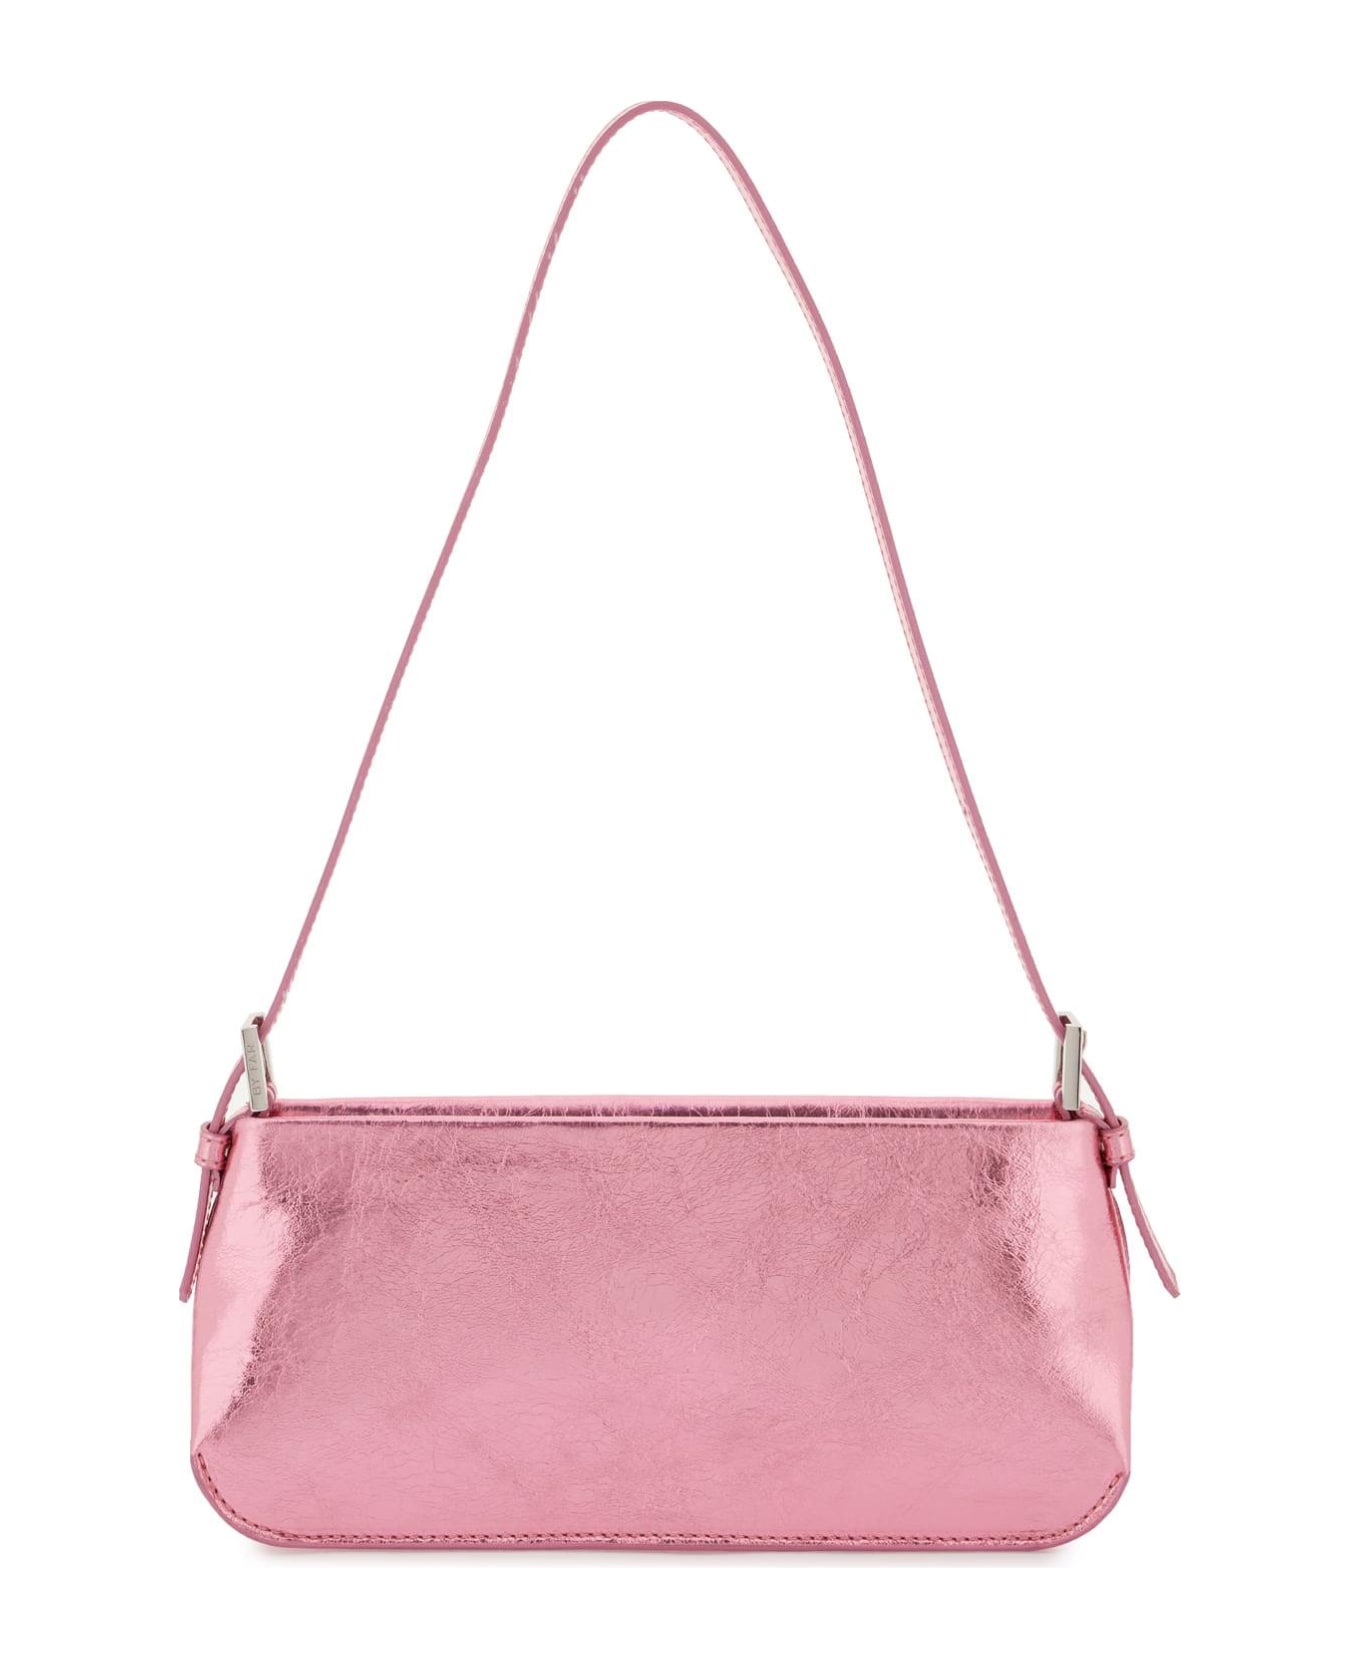 BY FAR Metallic Leather 'dulce' Shoulder Bag - LIPSTICK (Pink)